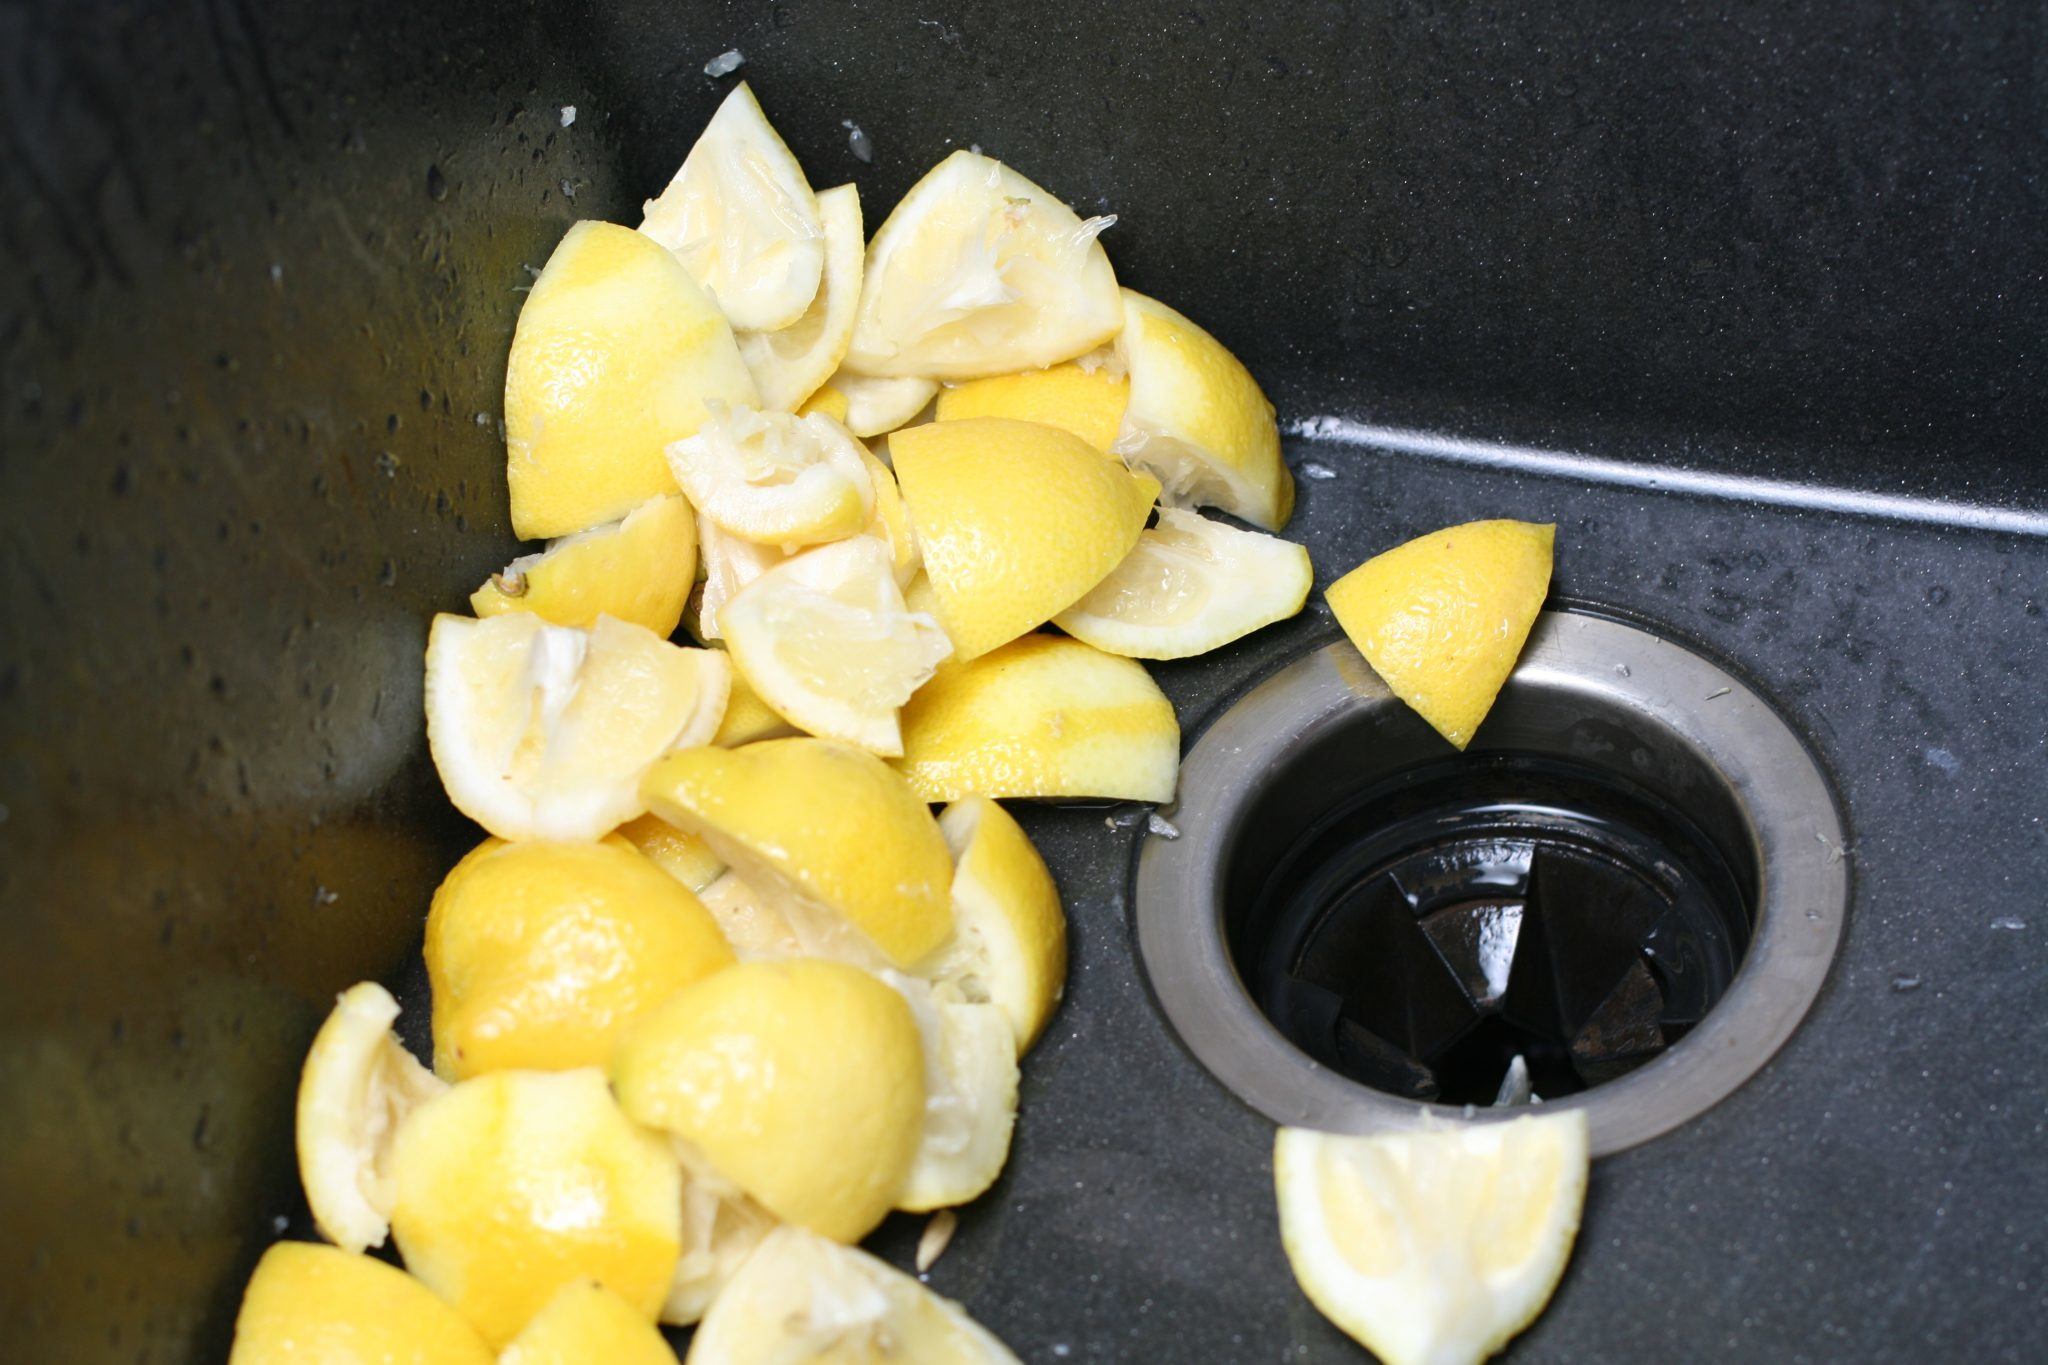 Used lemon being put inside the  garbage disposal